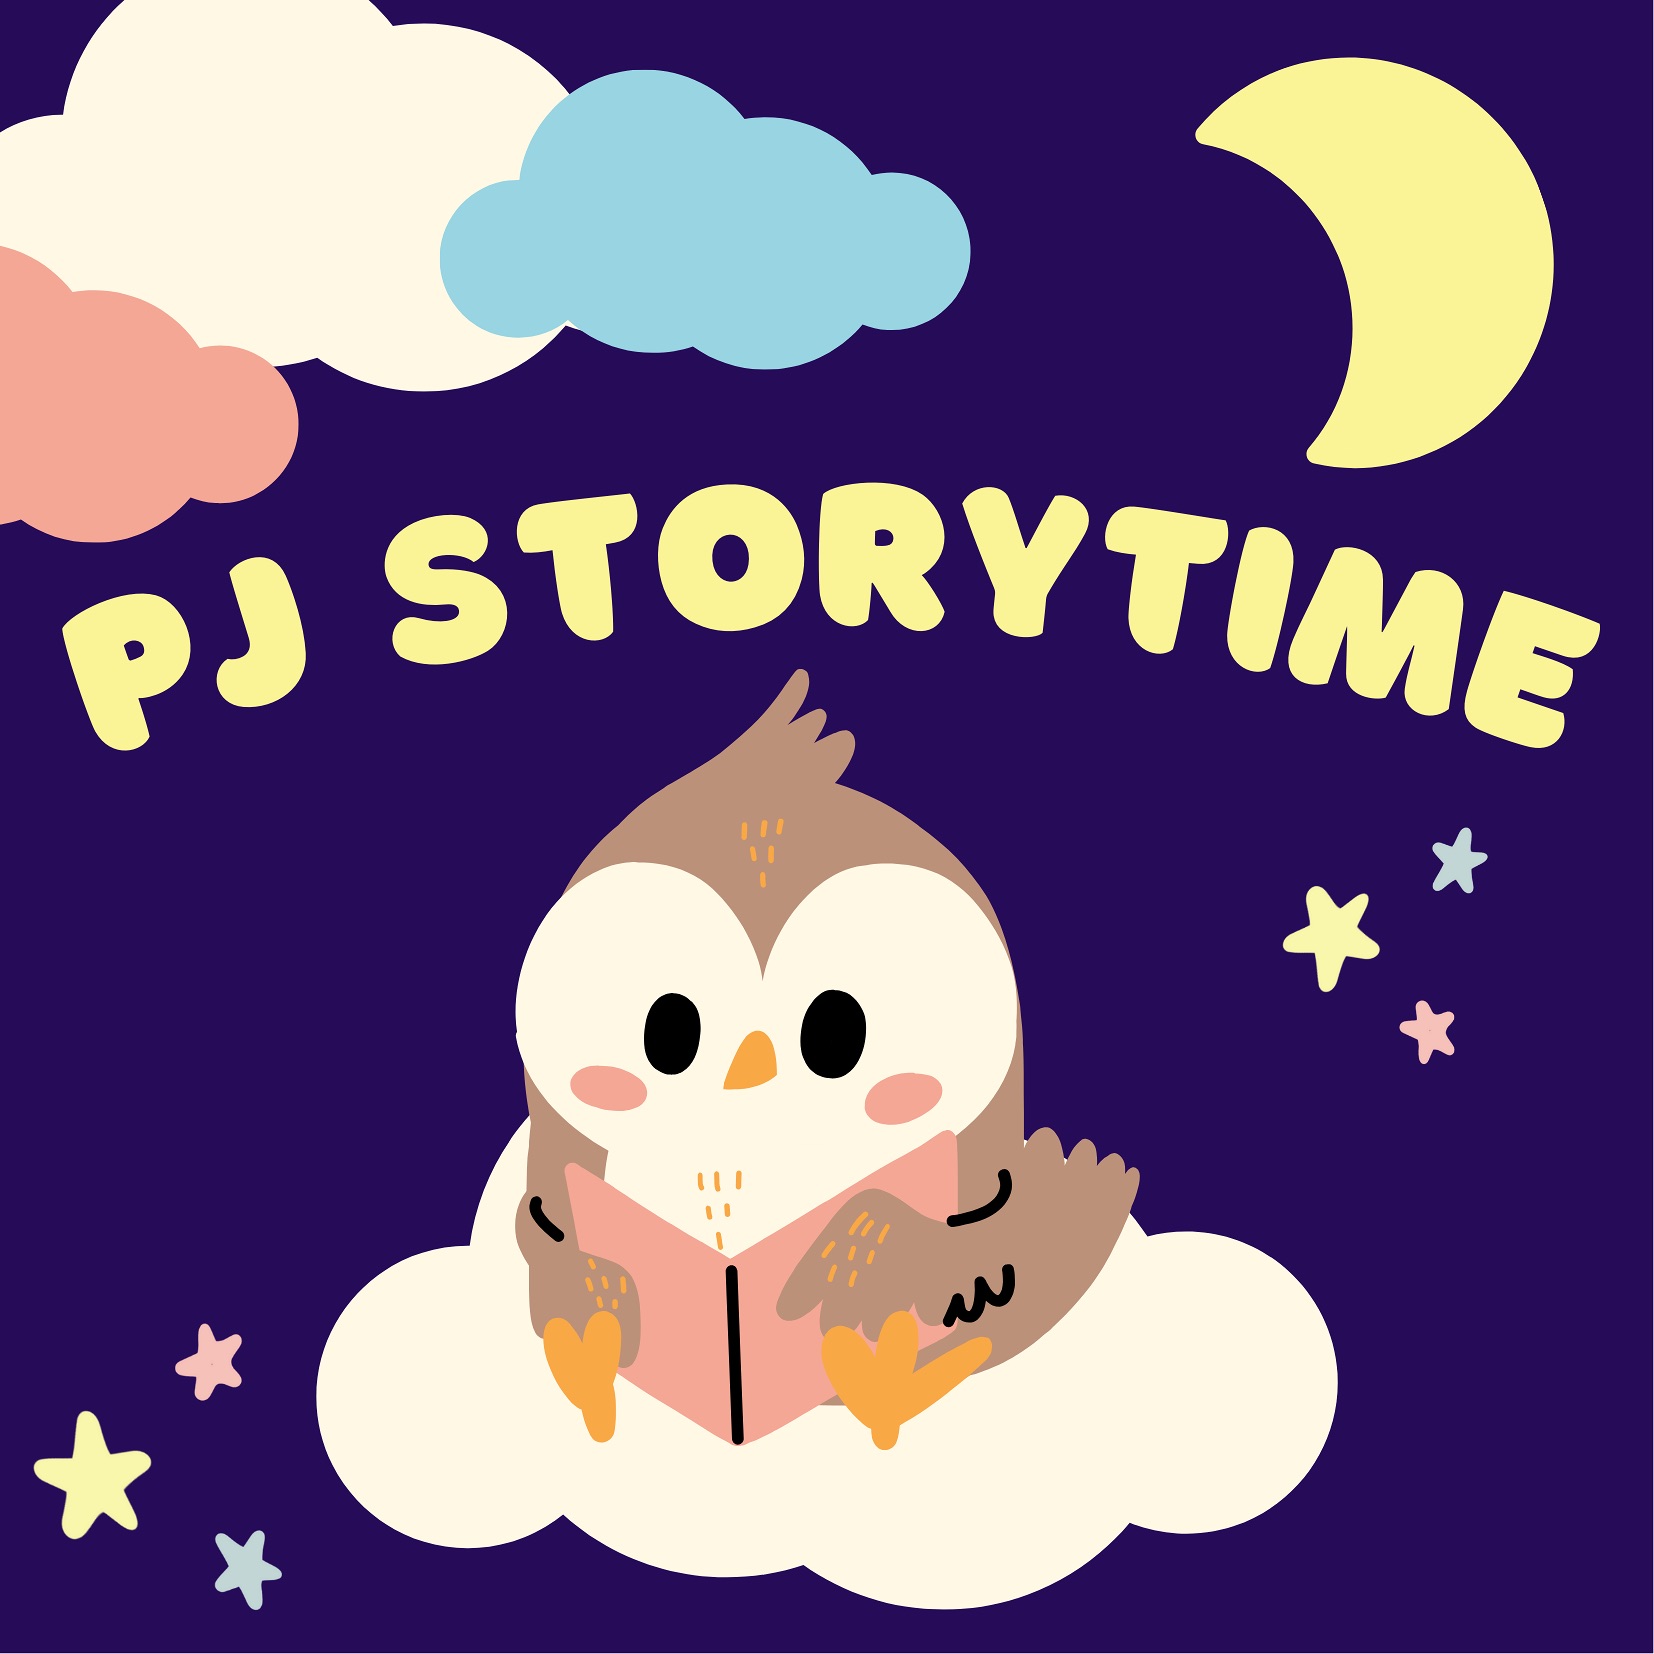 PJ Storytime